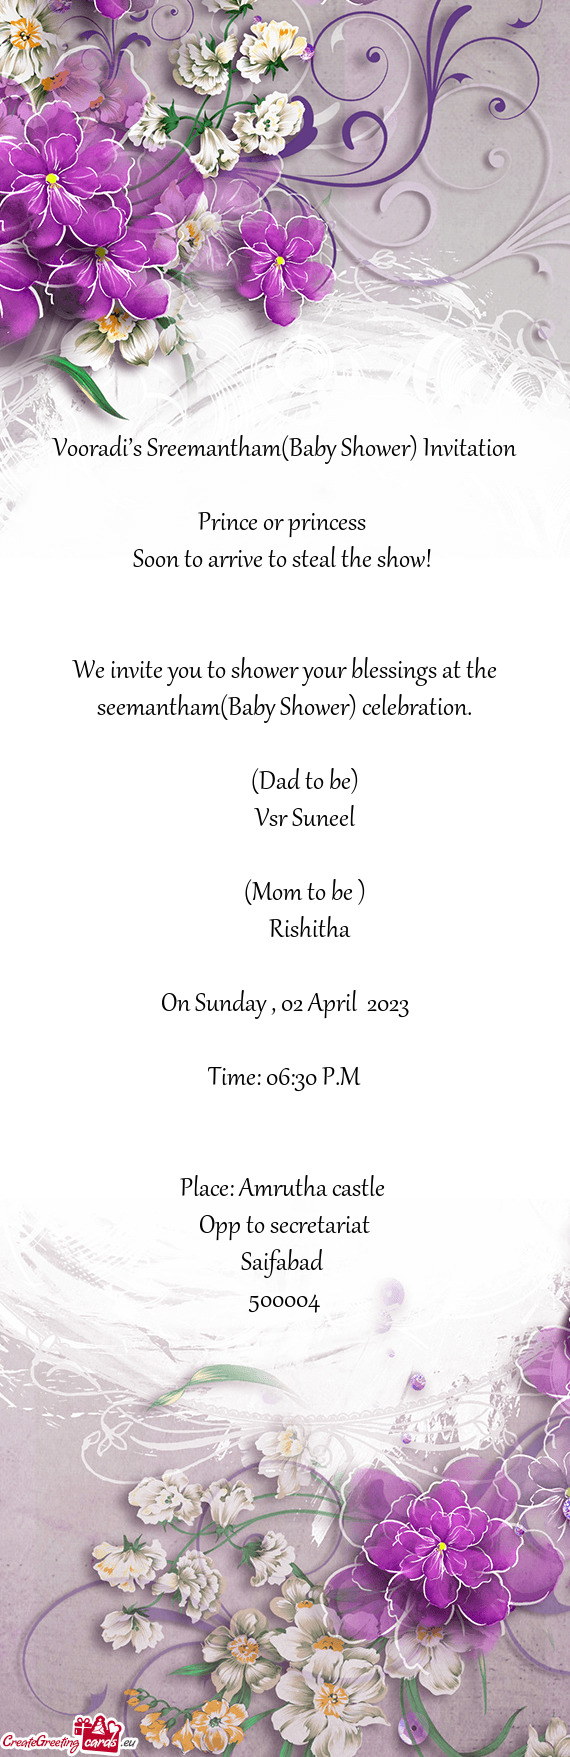 Vooradi’s Sreemantham(Baby Shower) Invitation